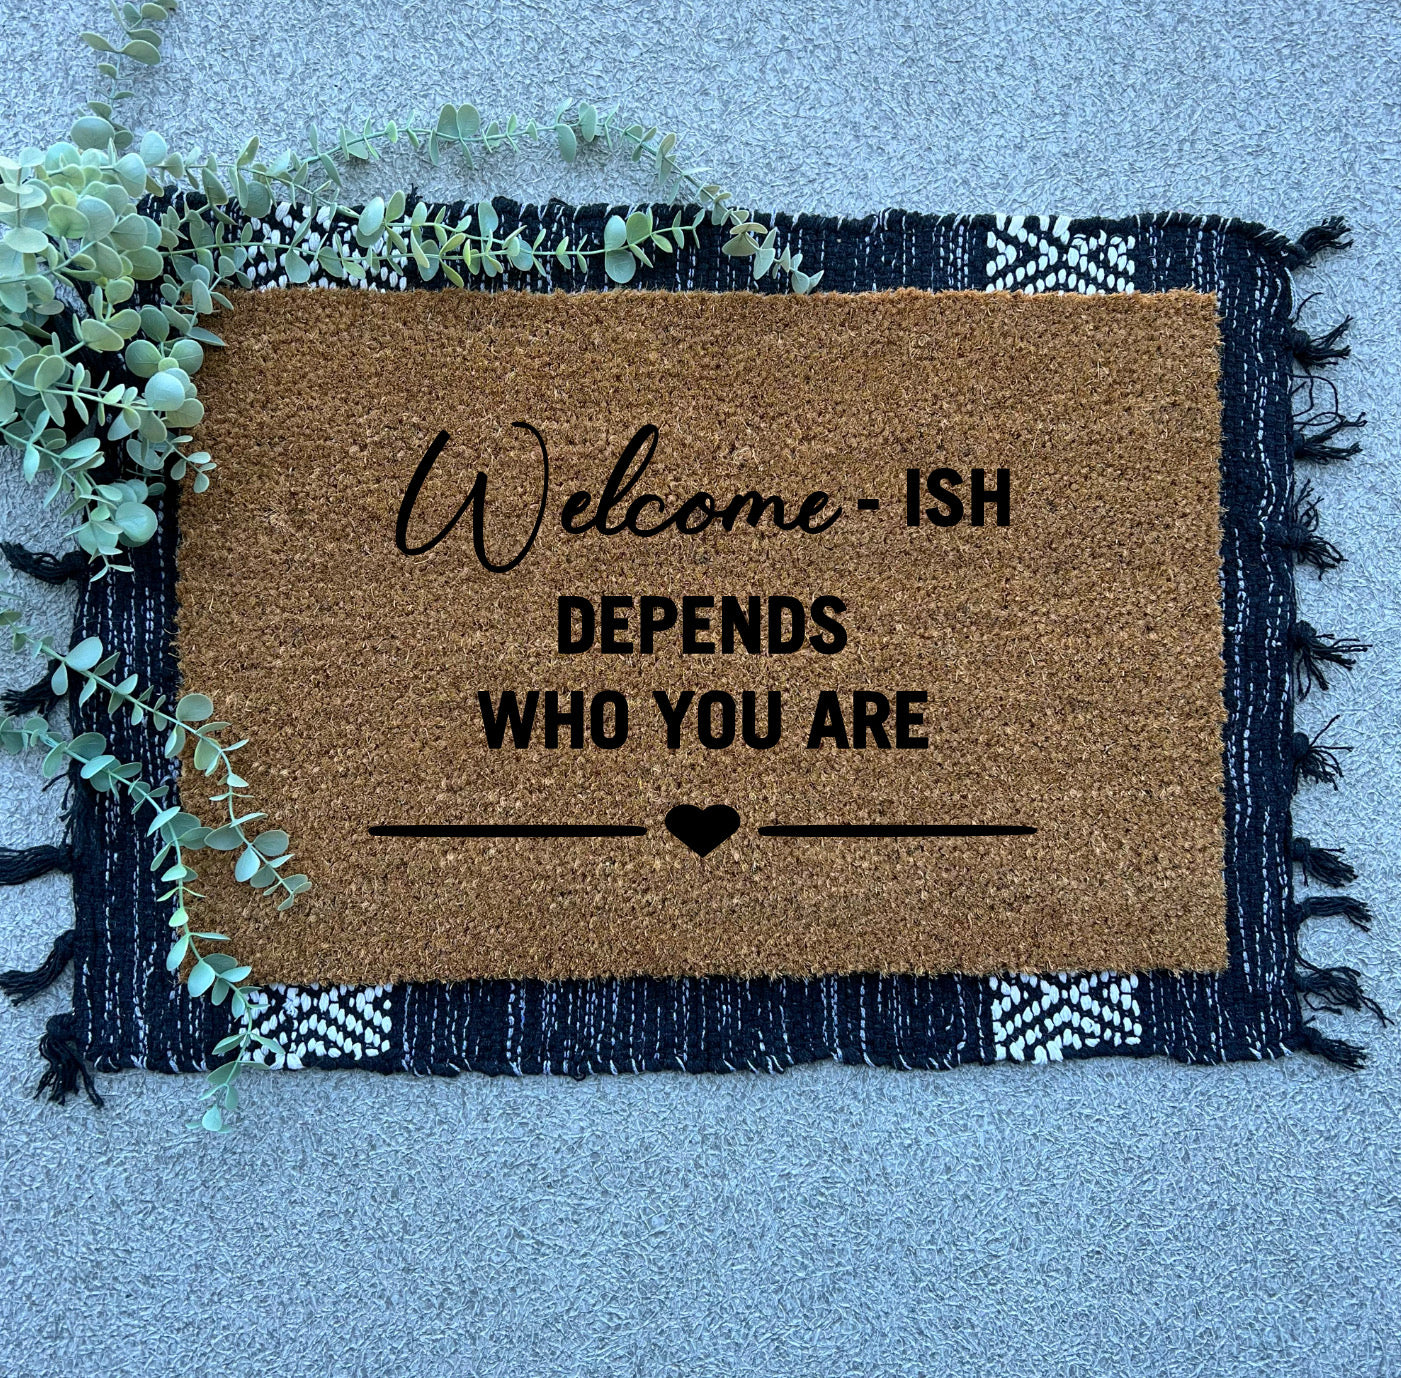 Welcome-ish